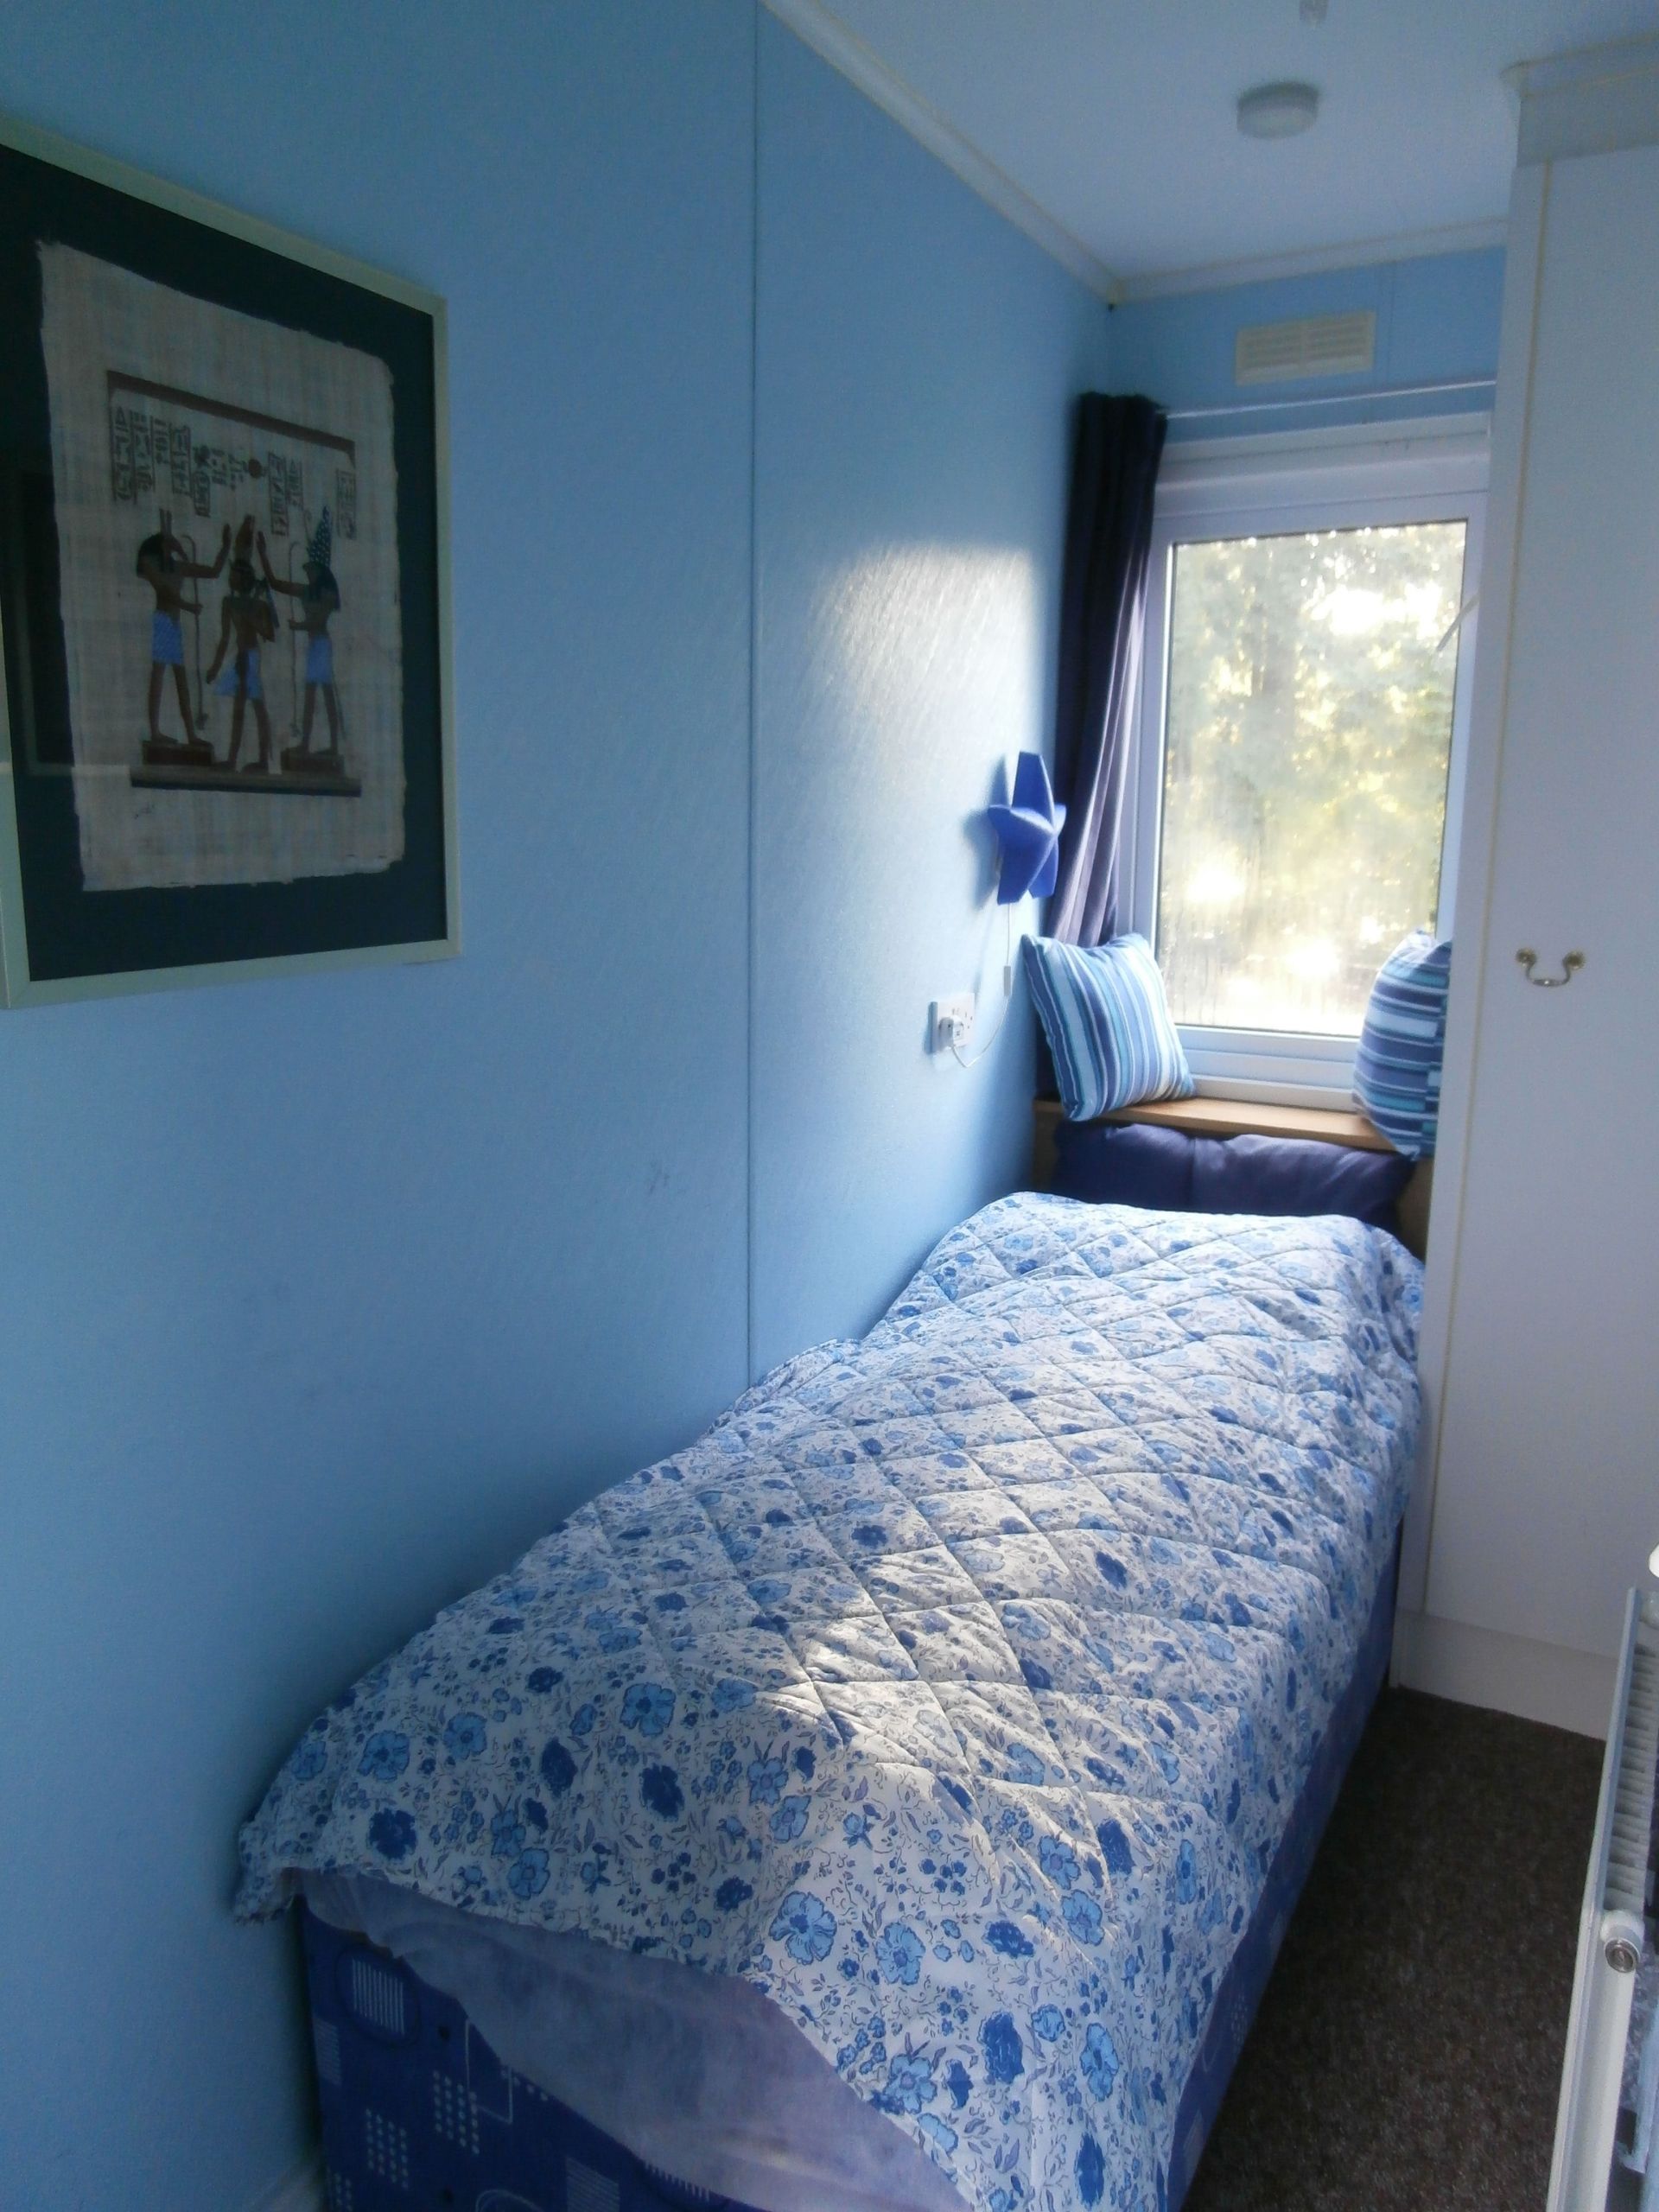 Mens Small Bedroom Ideas
 Single Beds for Small Men Bedroom Ideas